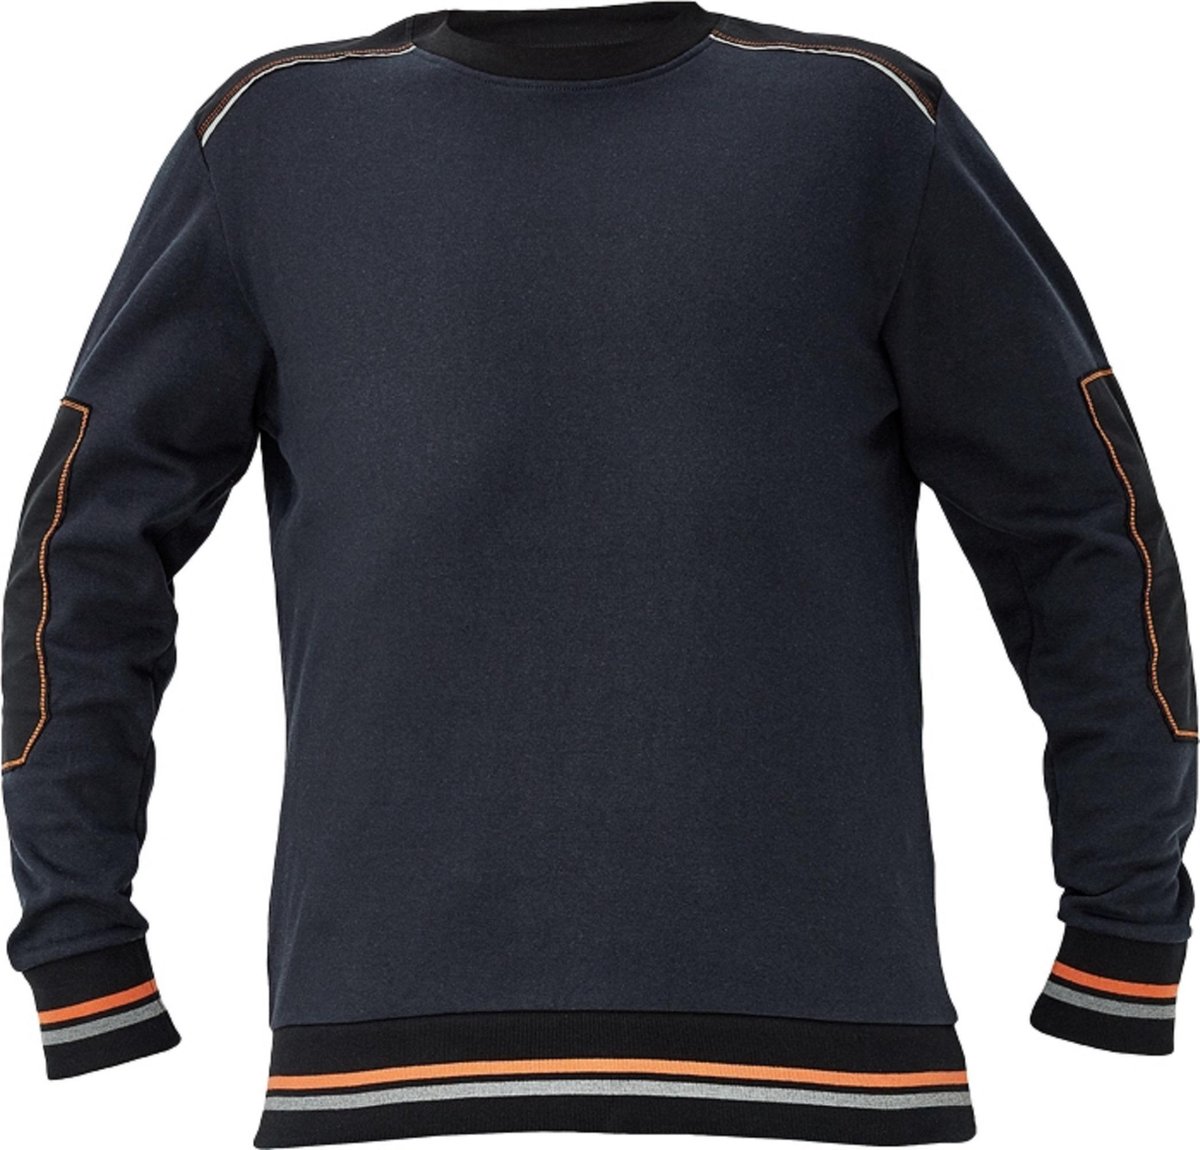 CRV Knoxfield Sweater 03060068 - Antraciet/Oranje - XL